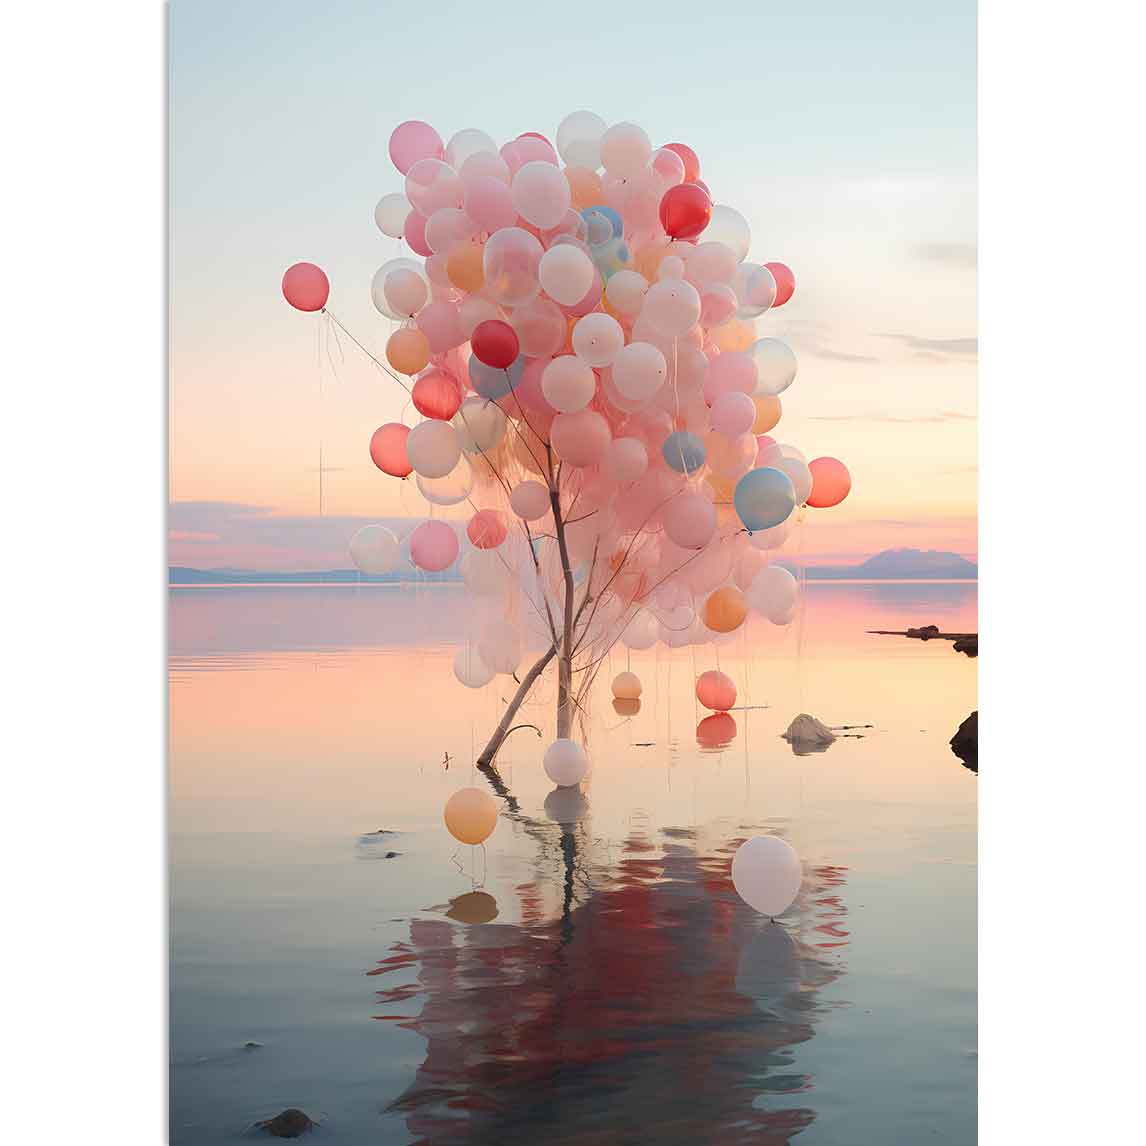 WATER BALLON - Wasserballon